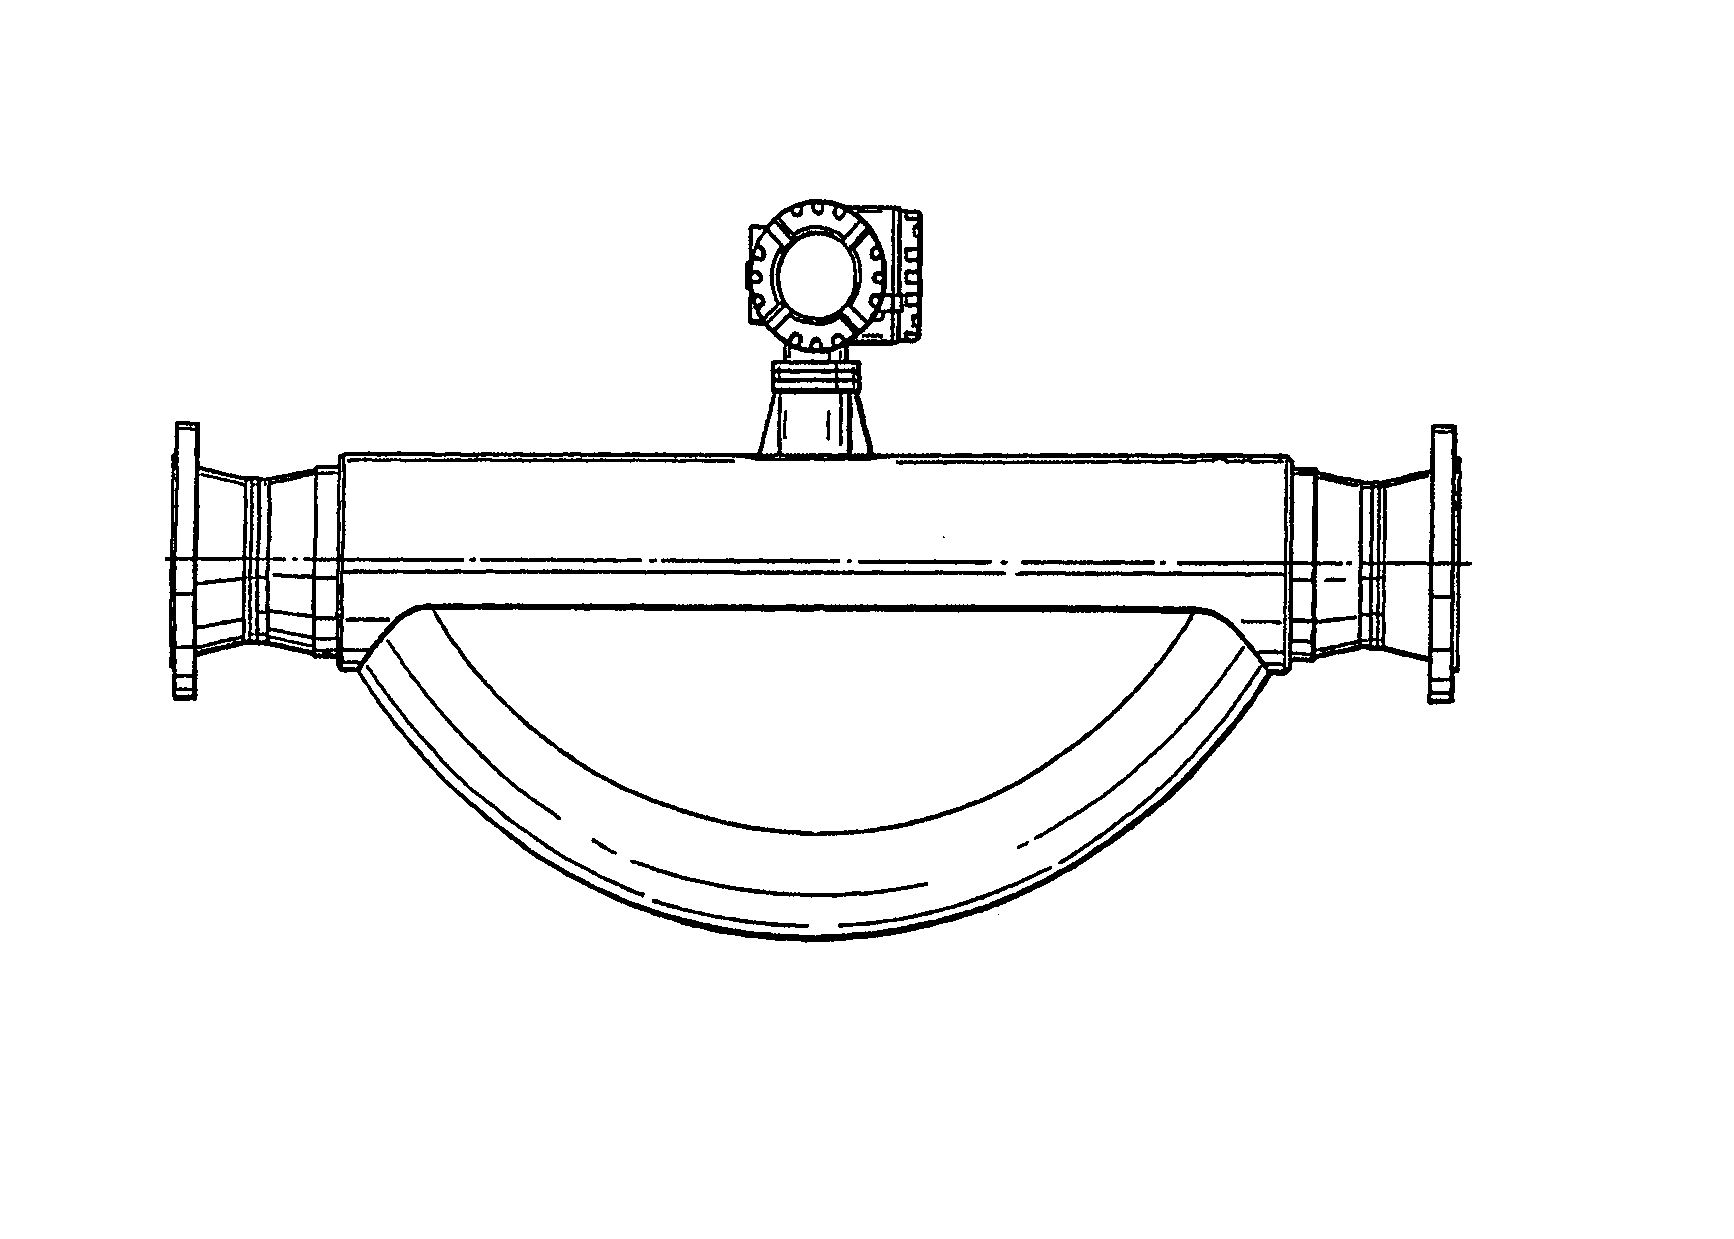 Vibration-type measurement transducer